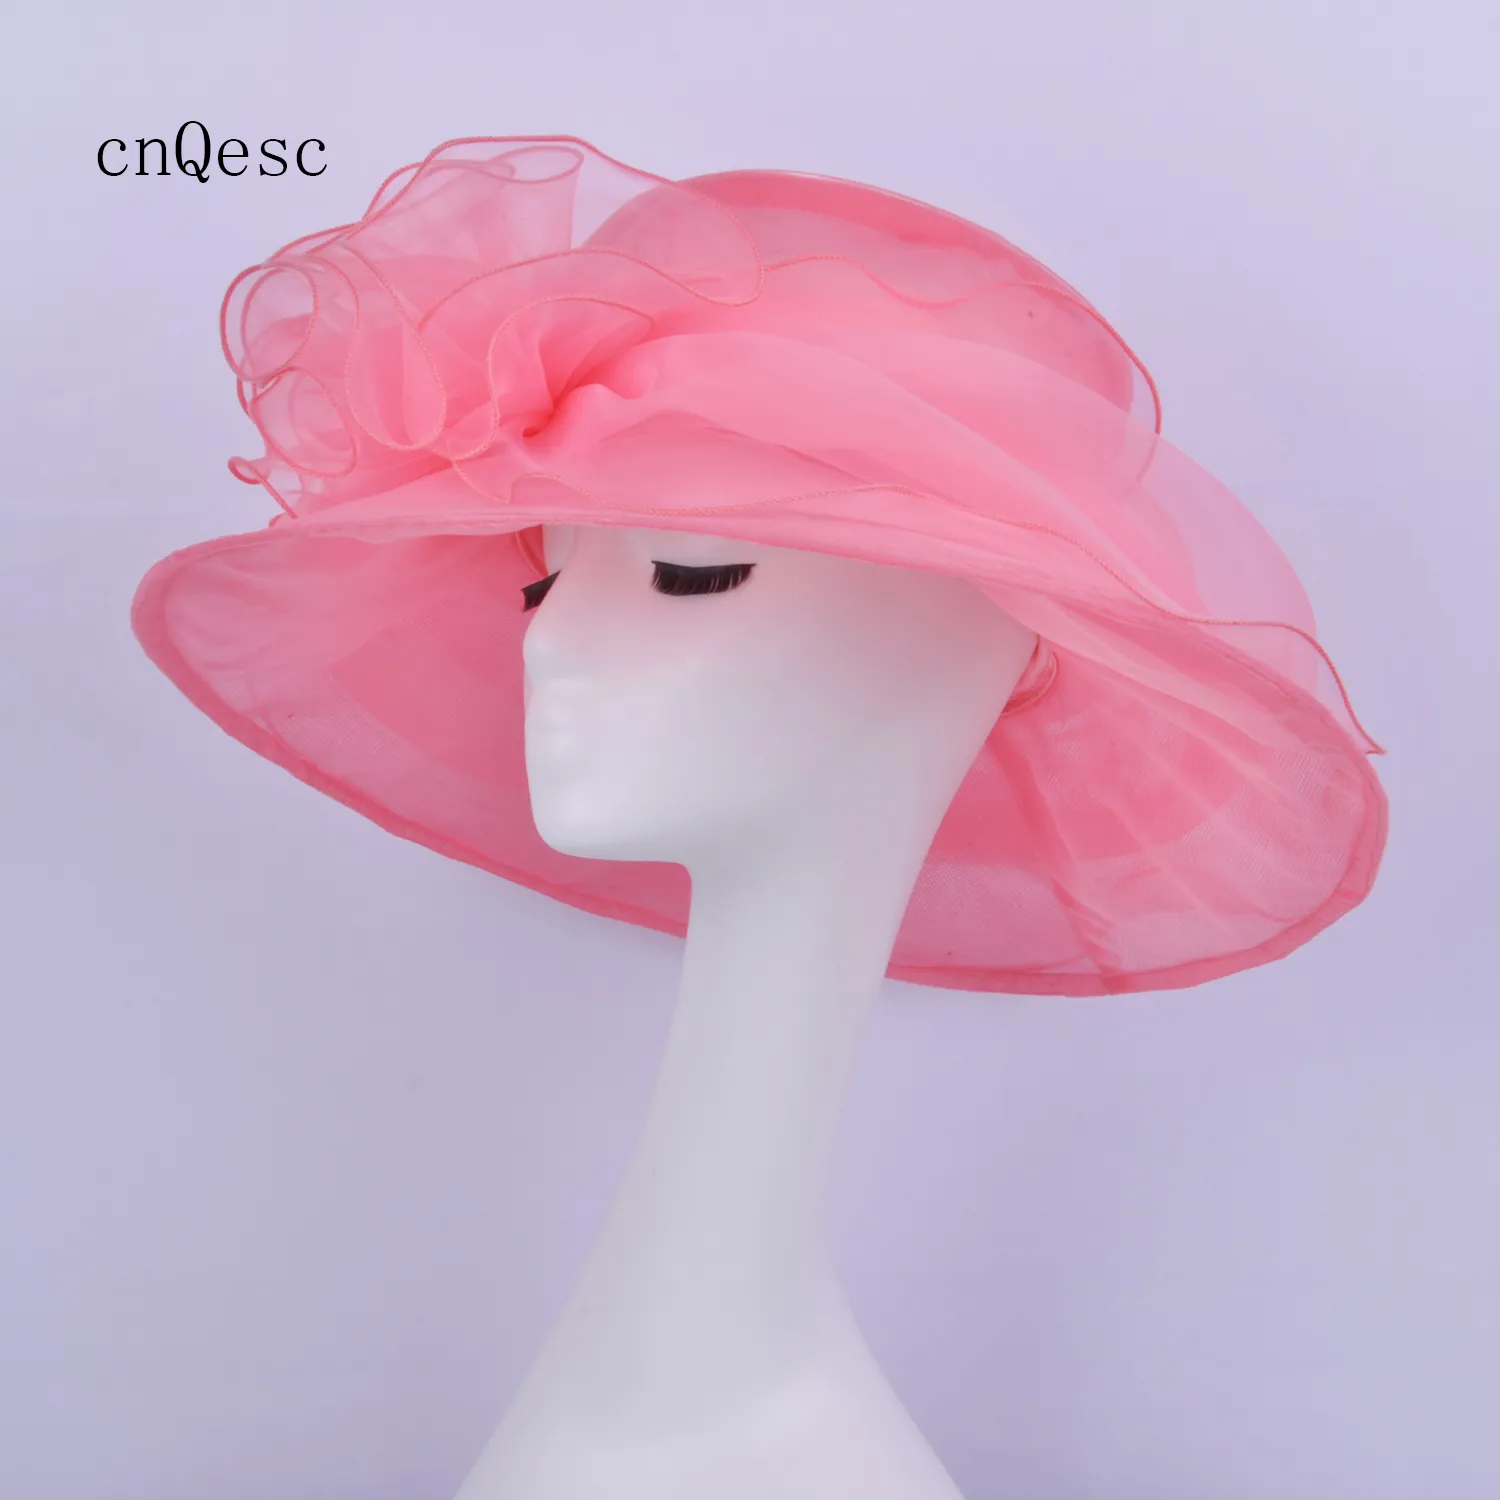 2019 O chapéu grande cor-de-rosa coral do chapéu de organza para as raças do casamento da igreja de Kentucky derby party com flor.